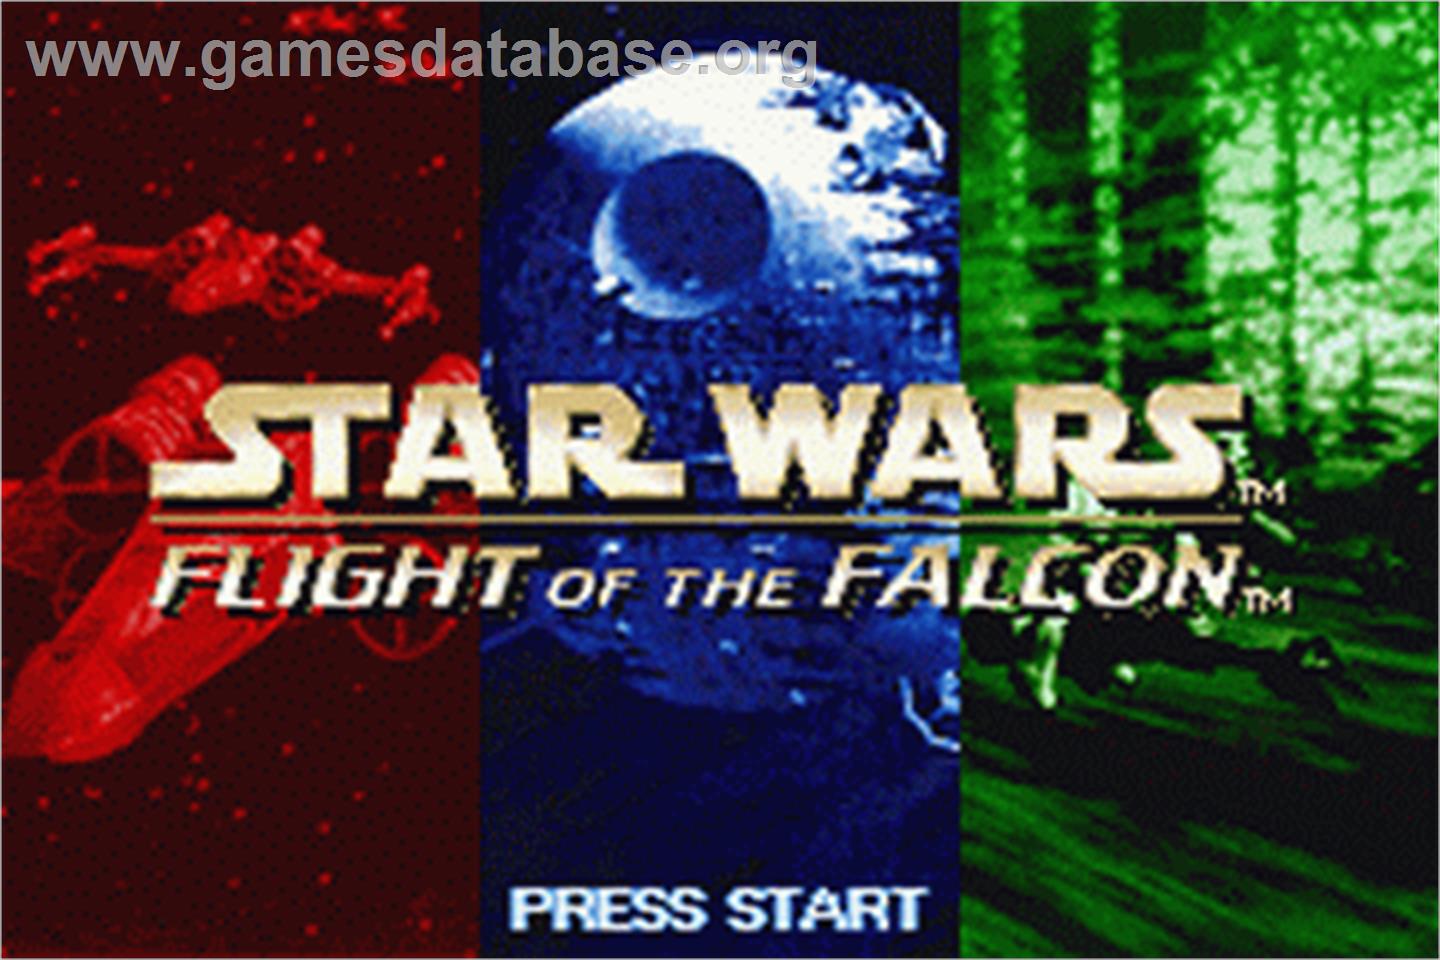 Star Wars: Flight of the Falcon - Nintendo Game Boy Advance - Artwork - Title Screen